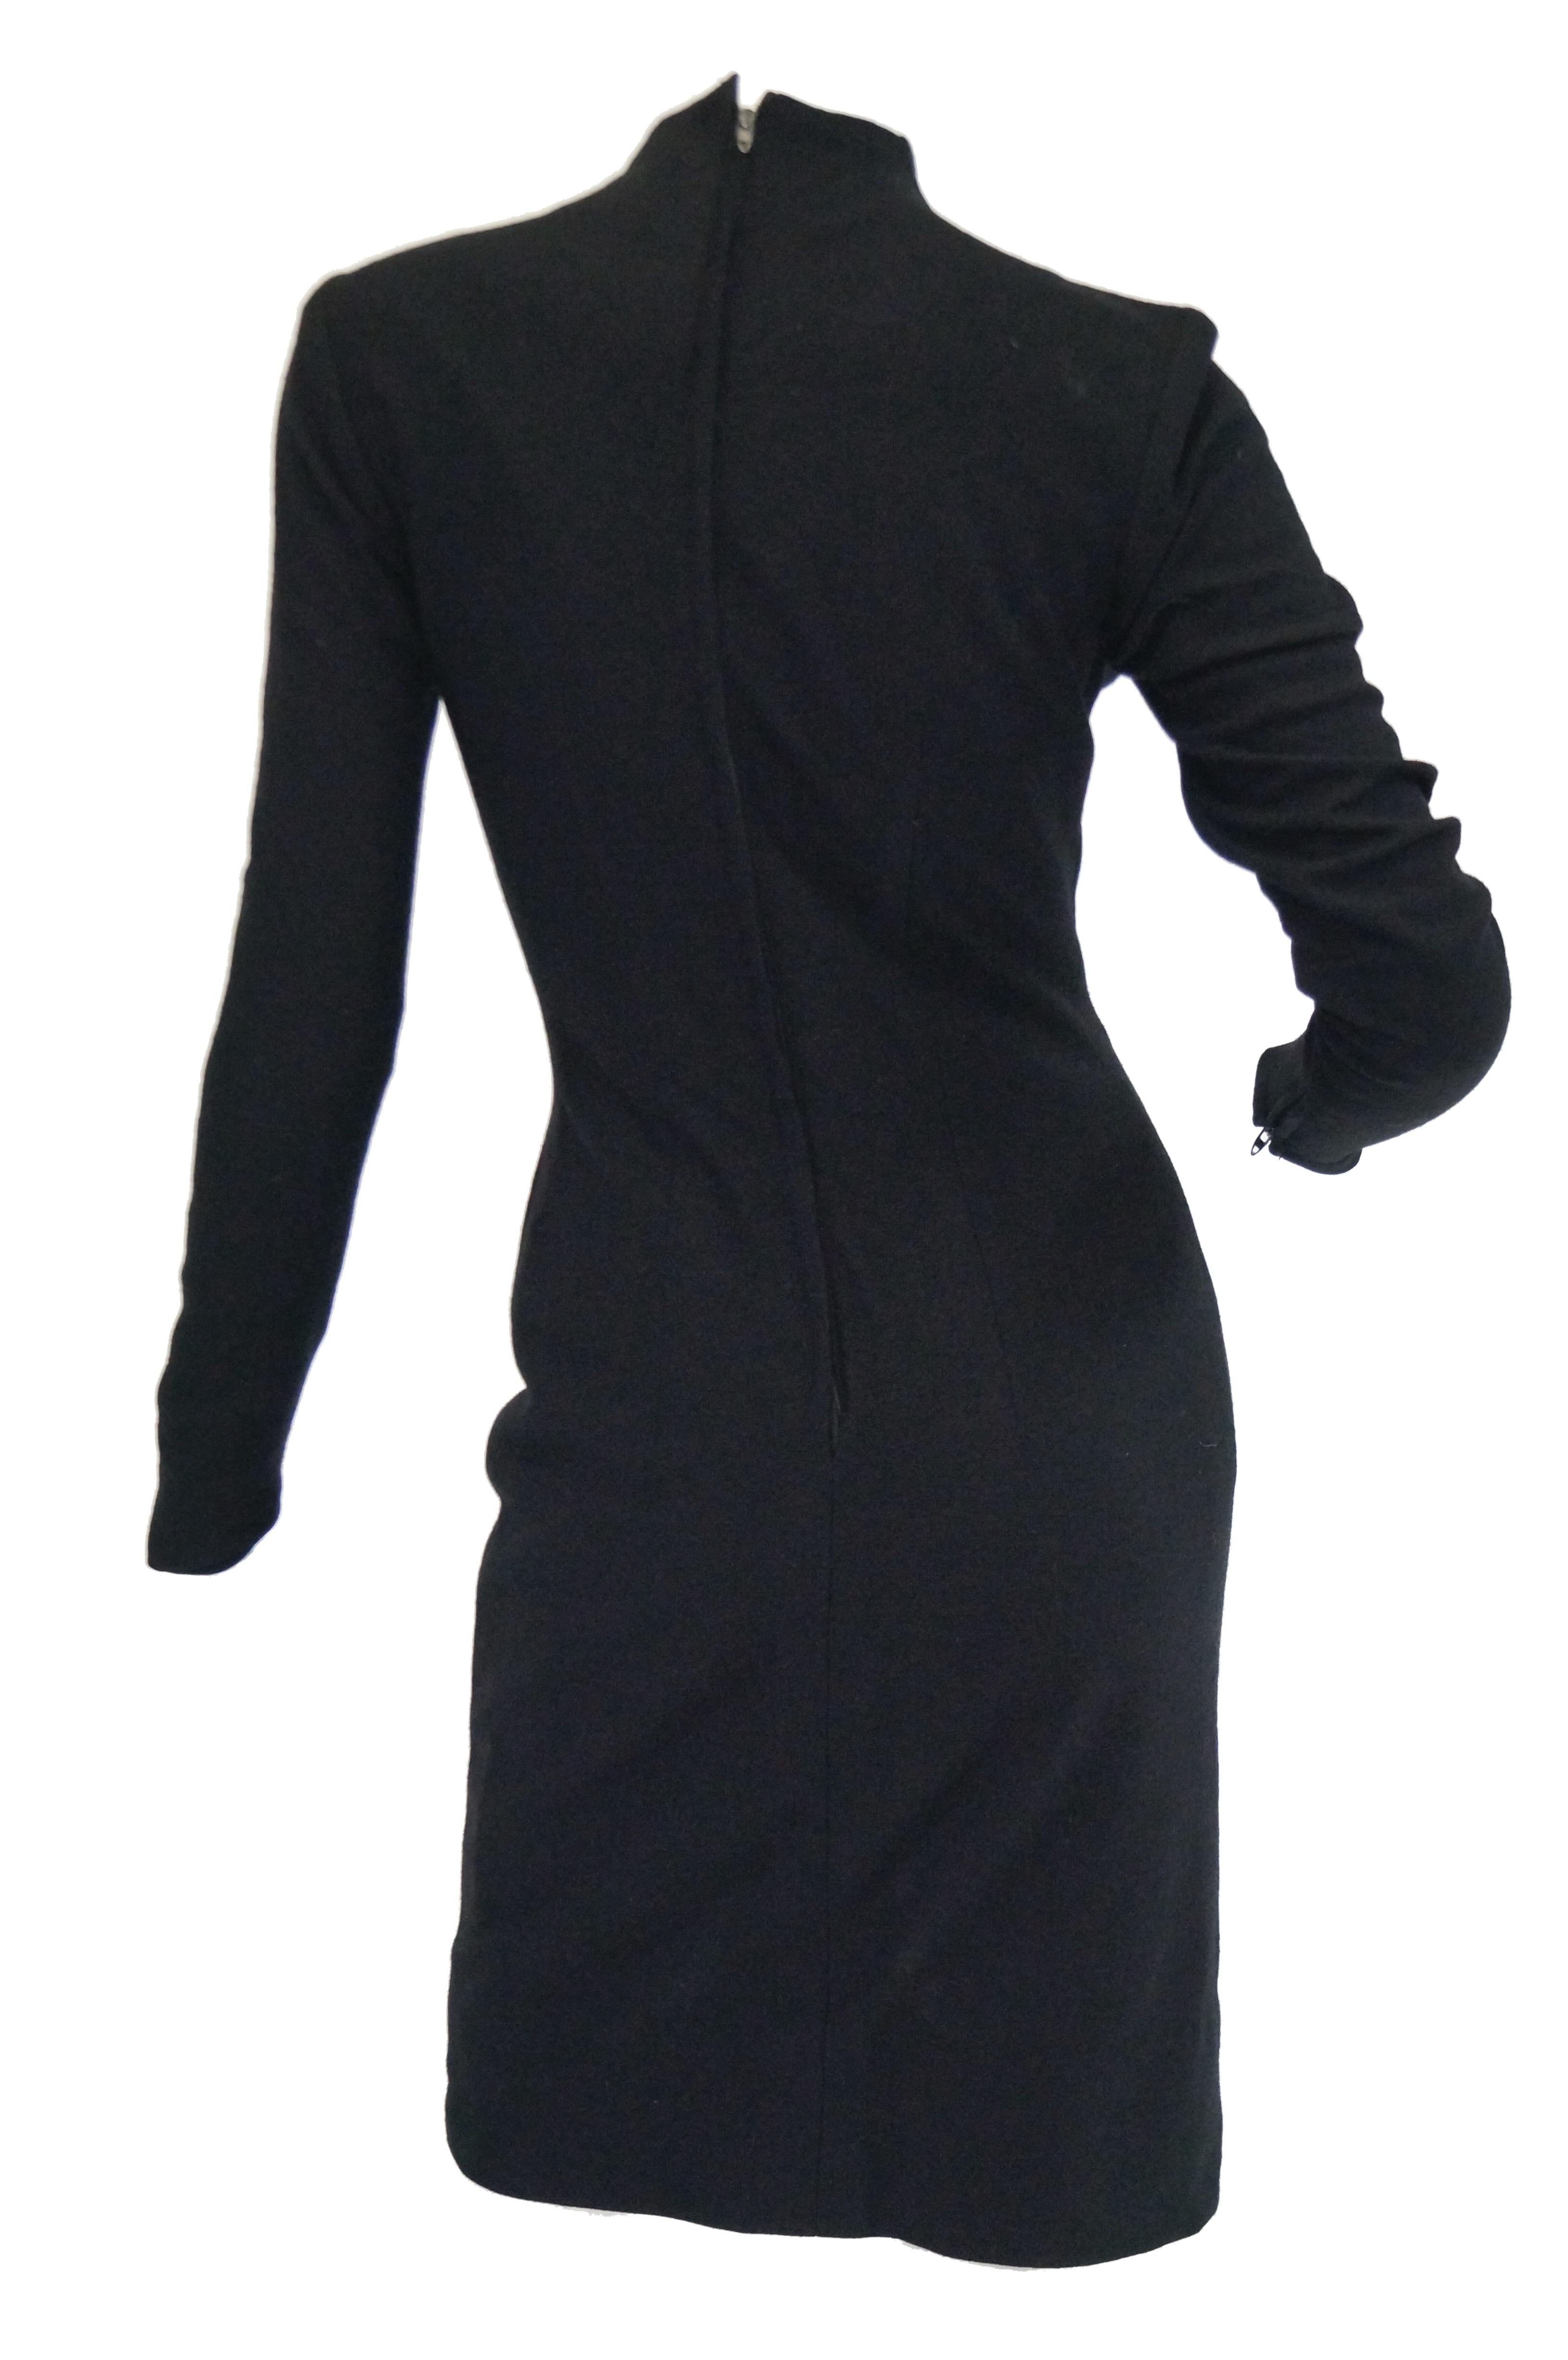 Rare 1960s Eisenberg Black Wool Mod Style Sheath Dress For Sale 1